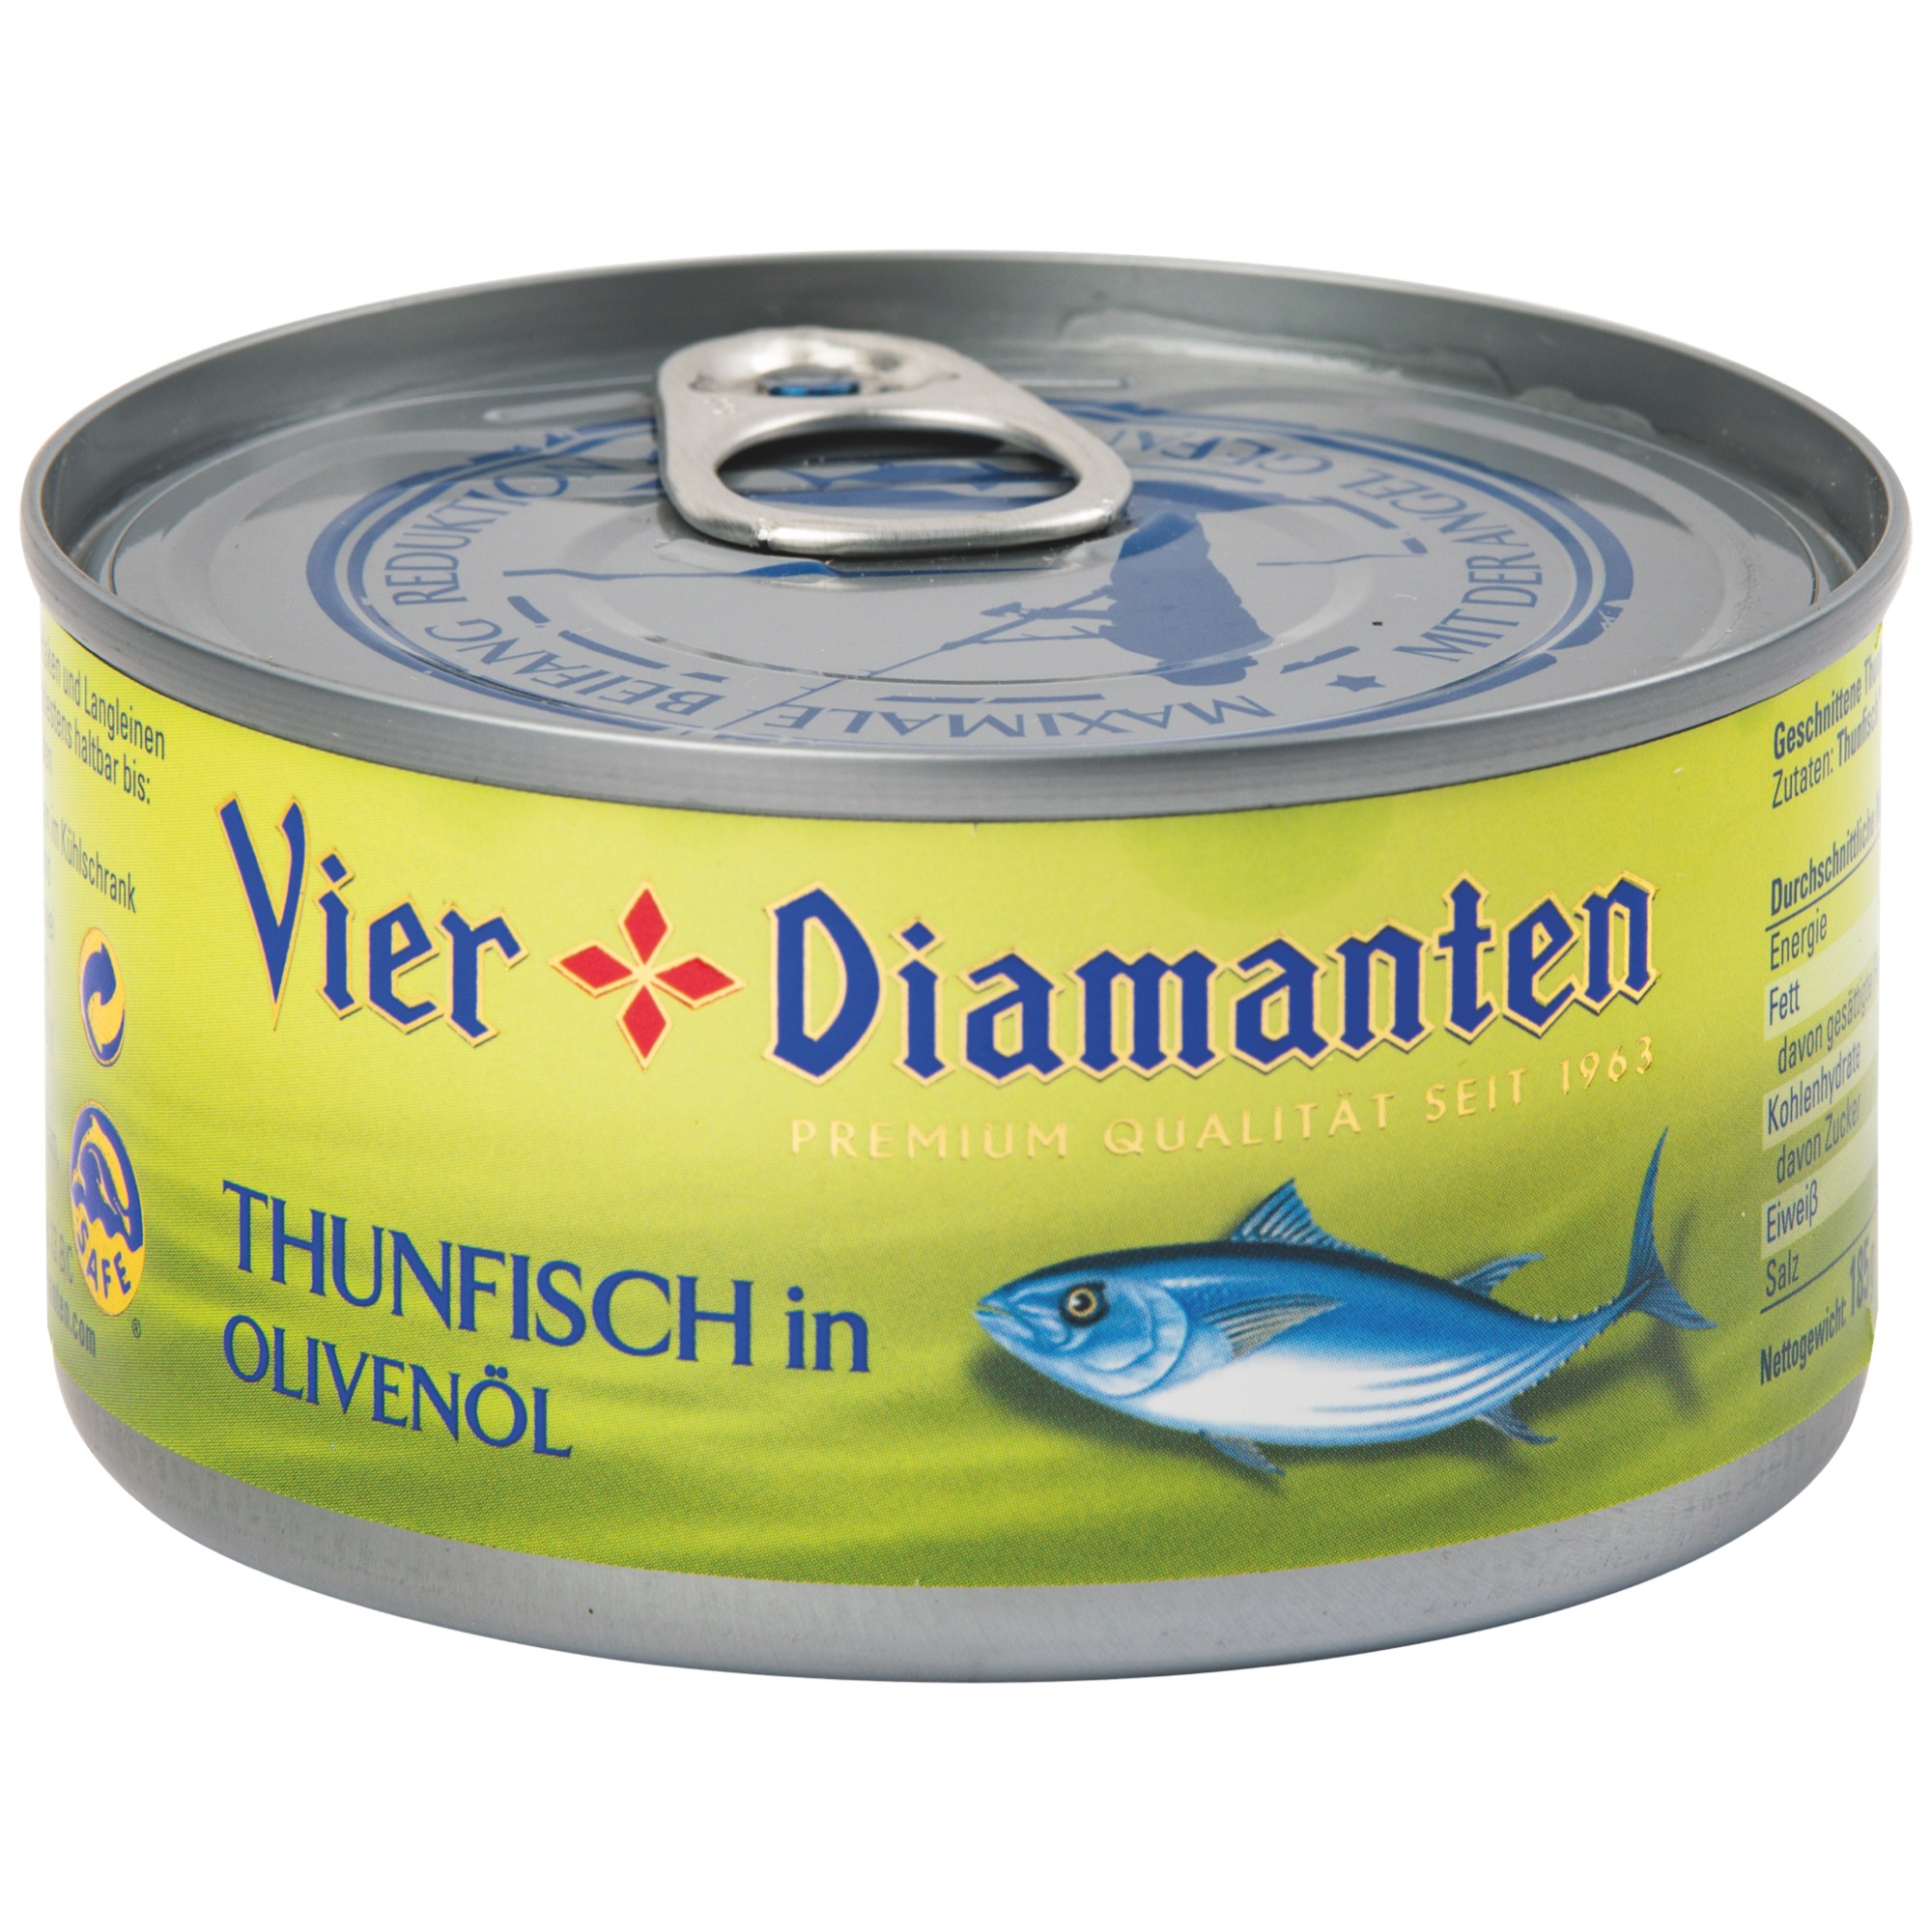 4 Diamant tuniak v oliv.oleji 185g